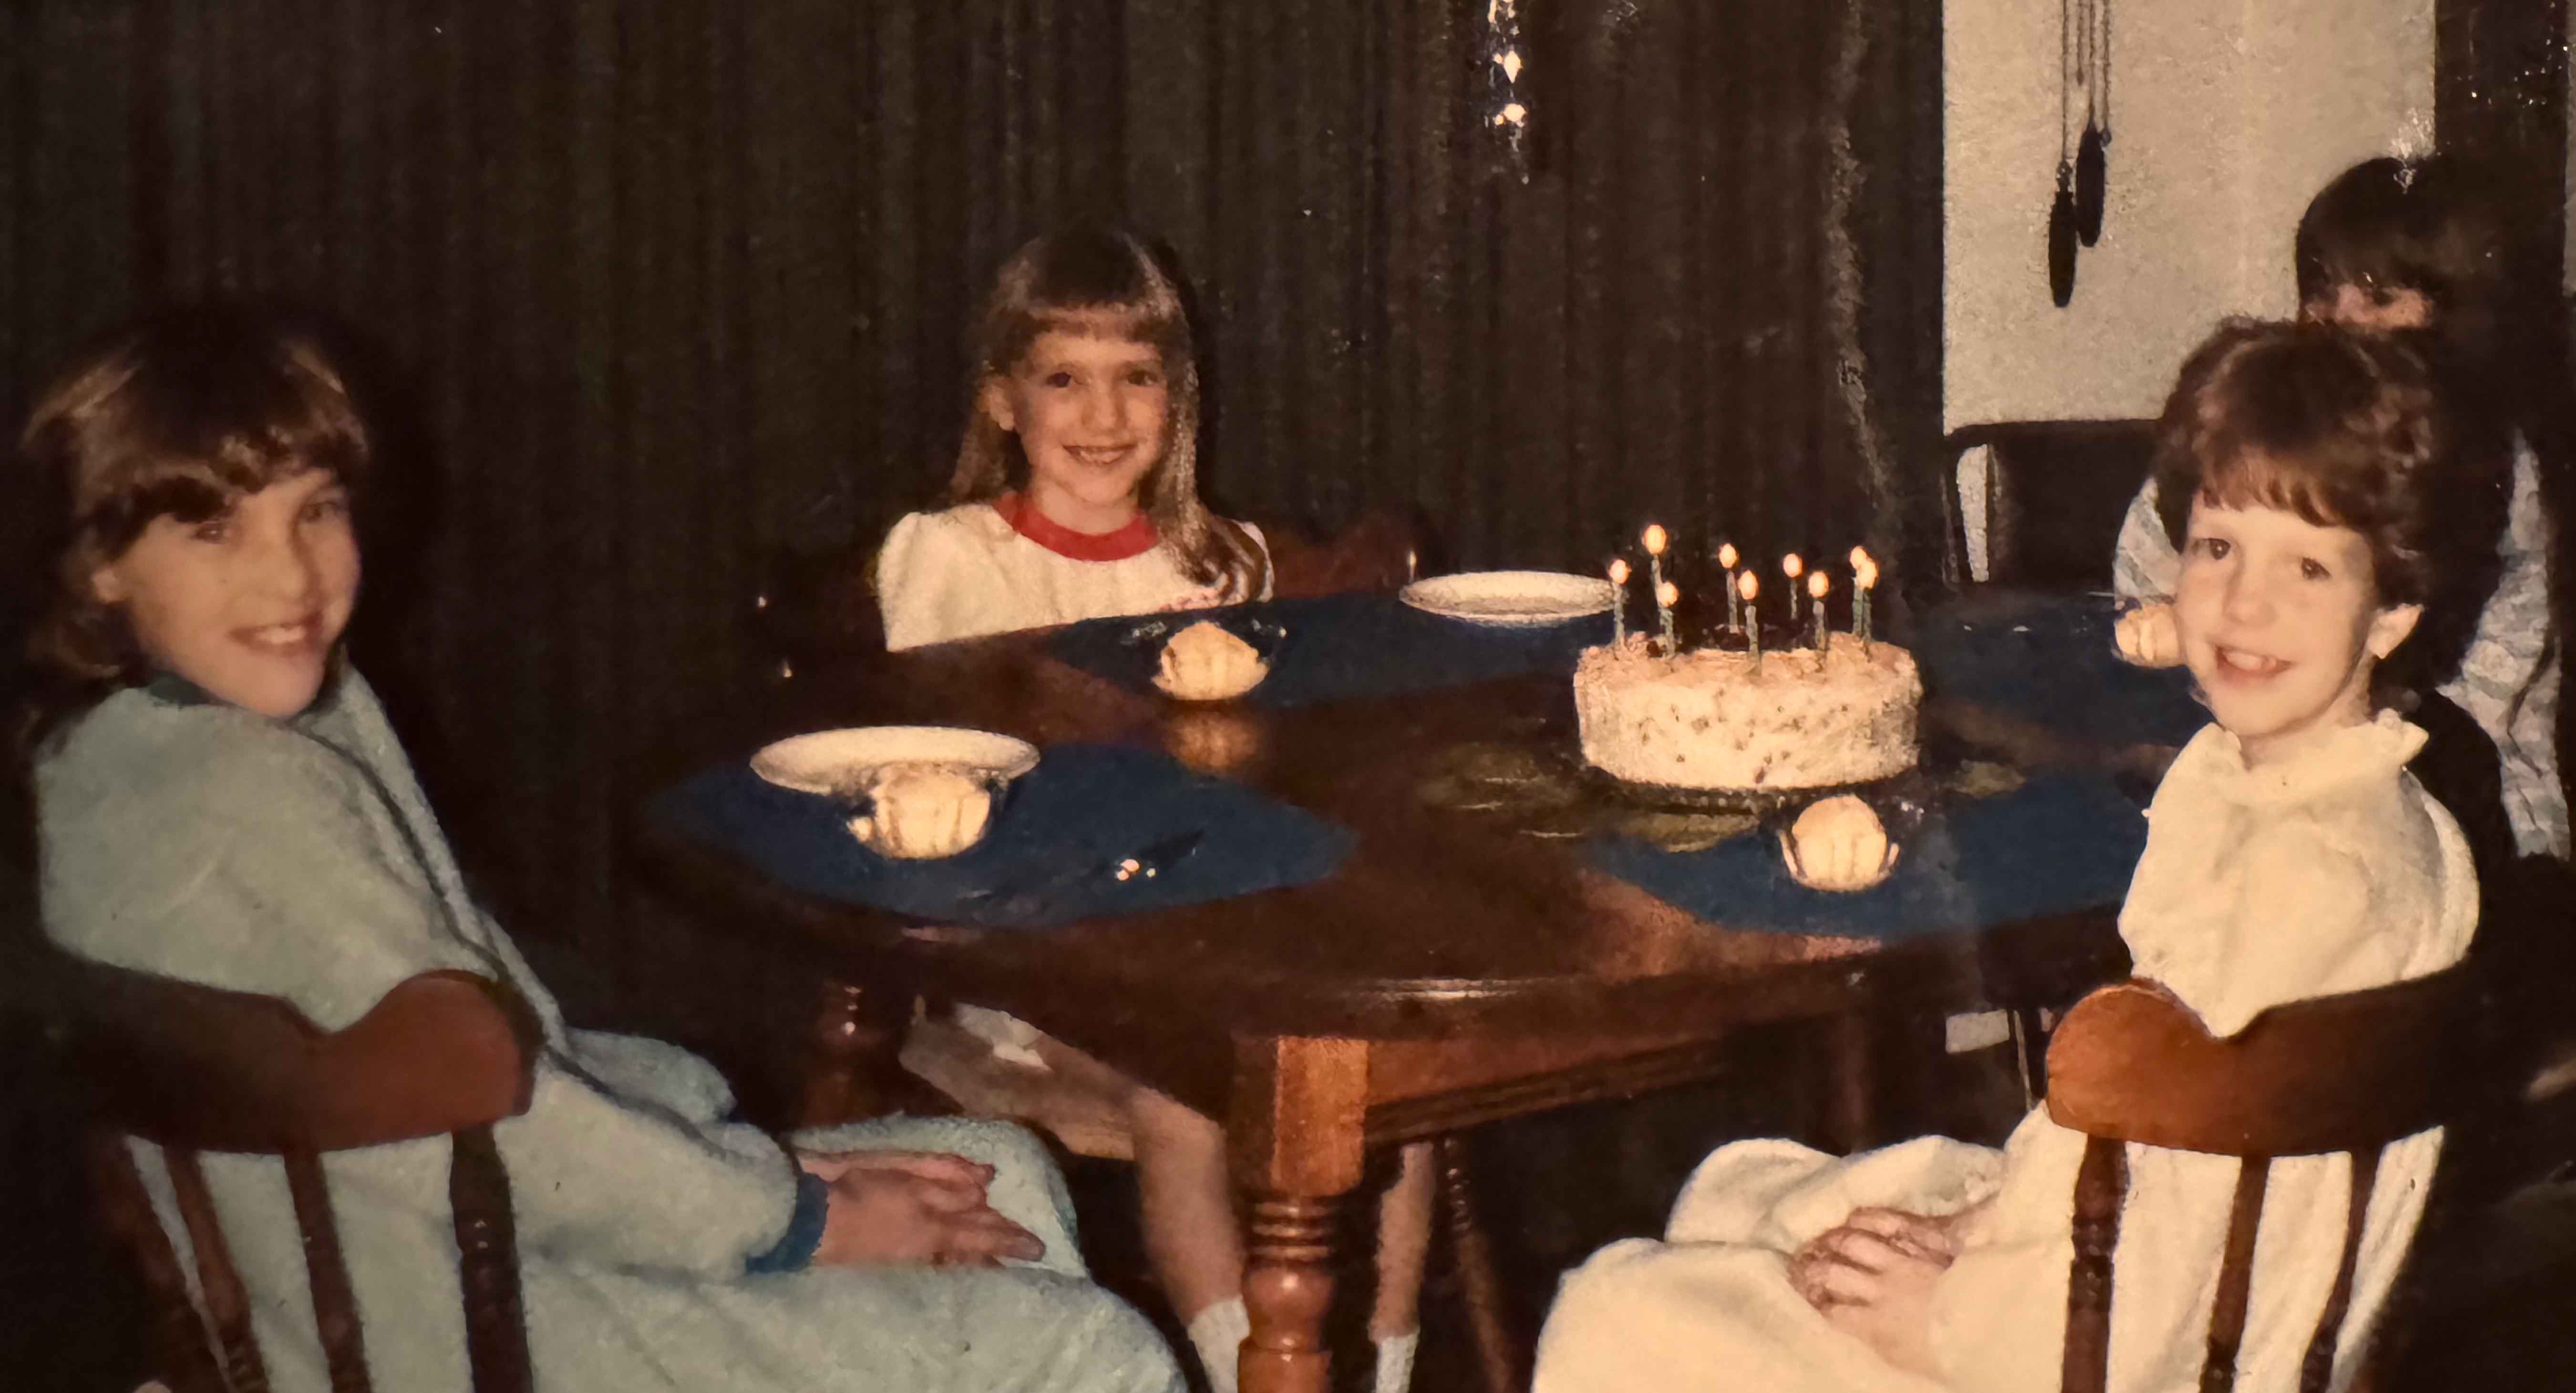 Girls sitting around the table celebrating a birthday